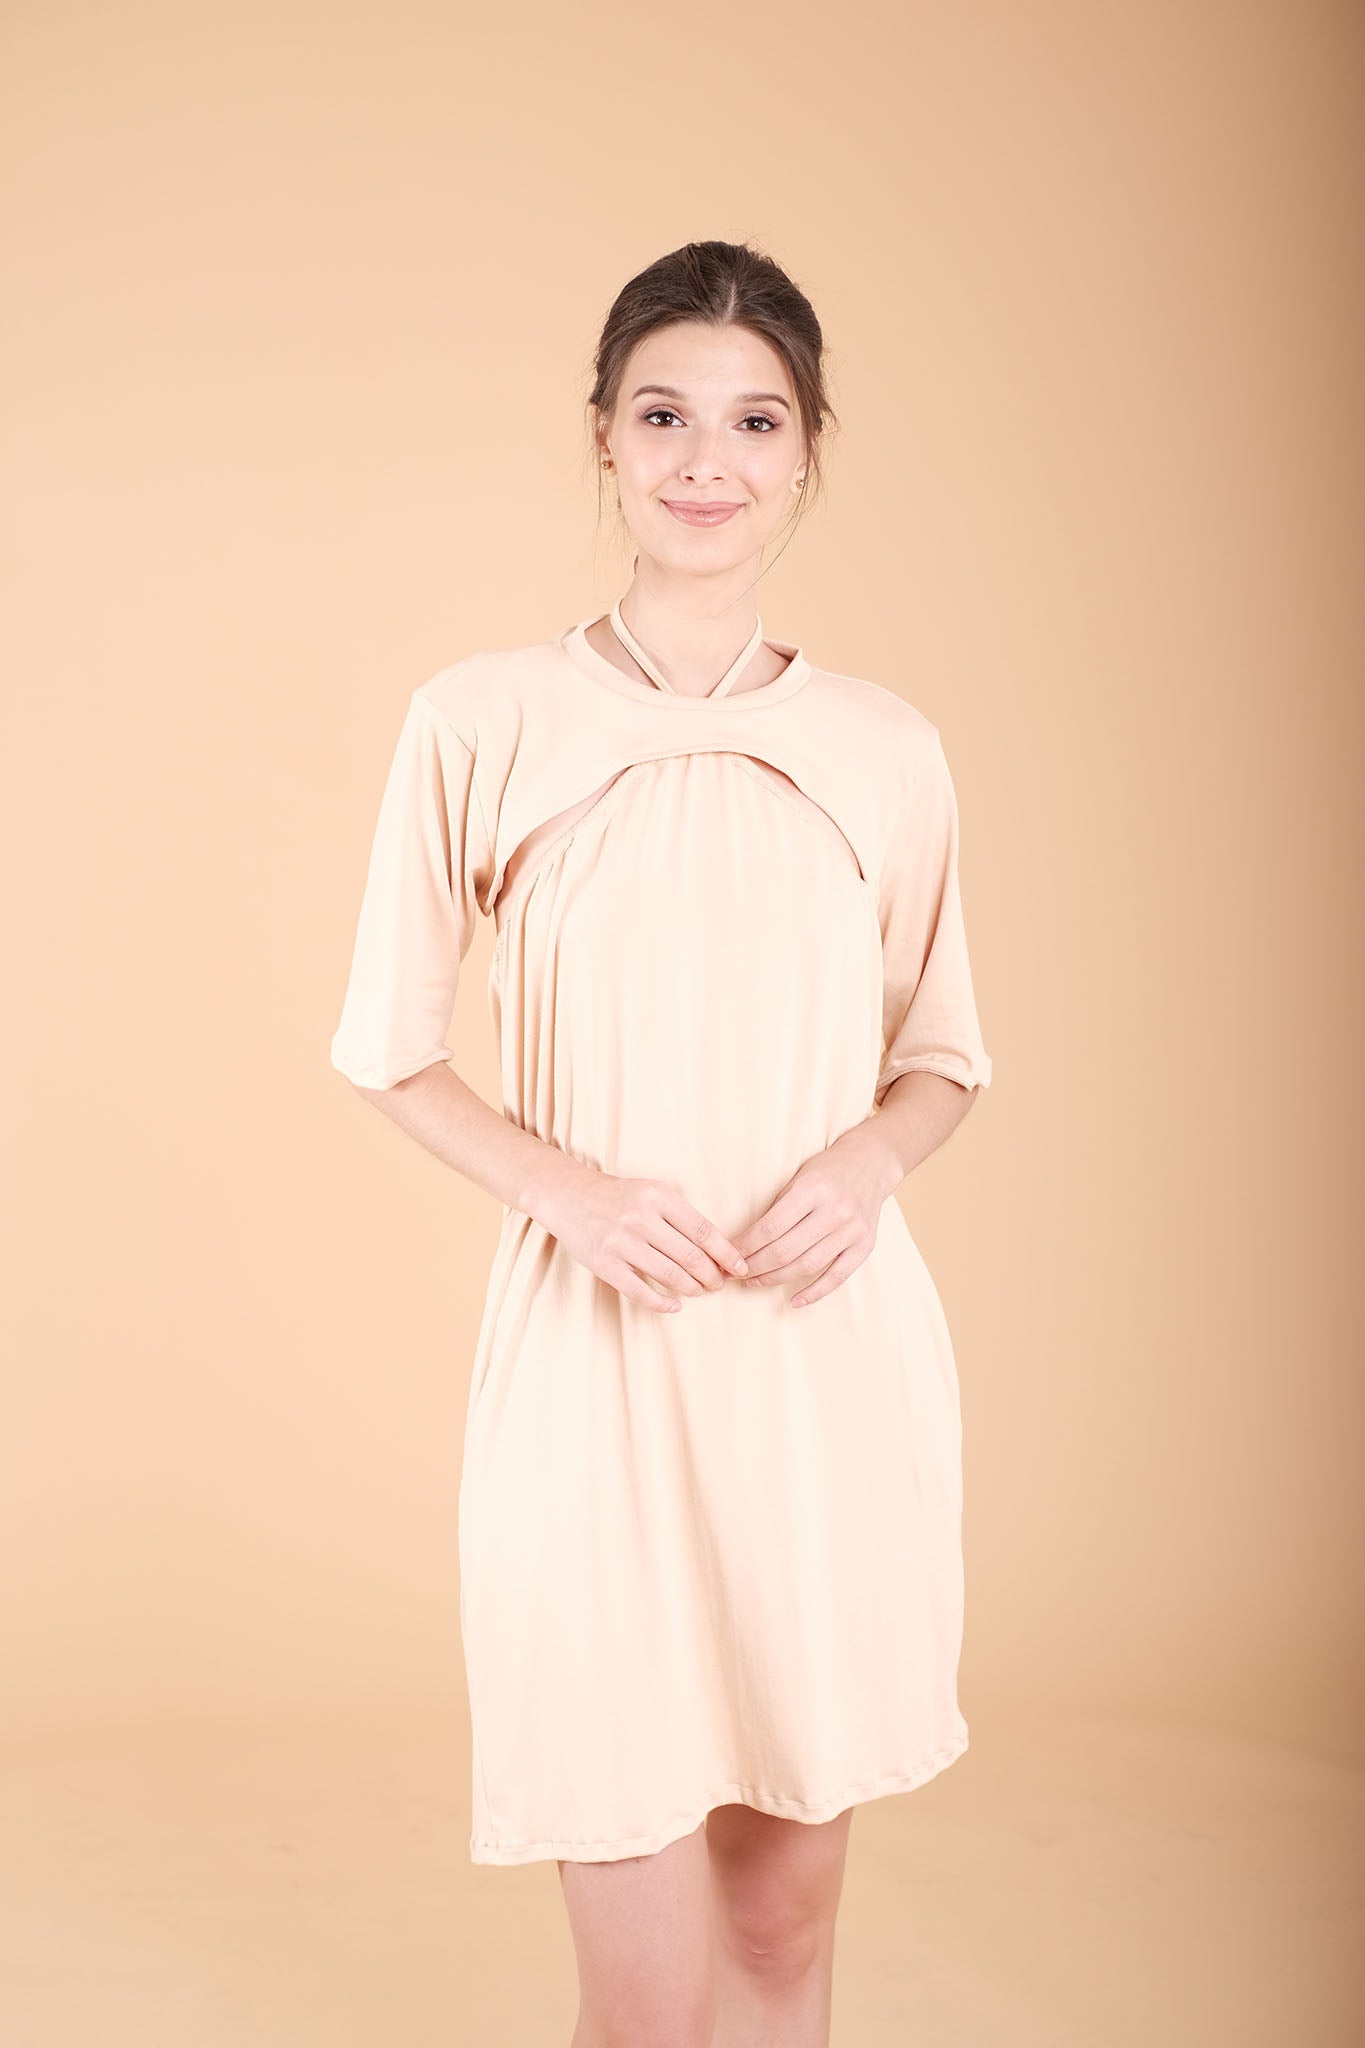 Cotton: Spardex A-Line Dress with Detachable Arm Warmers